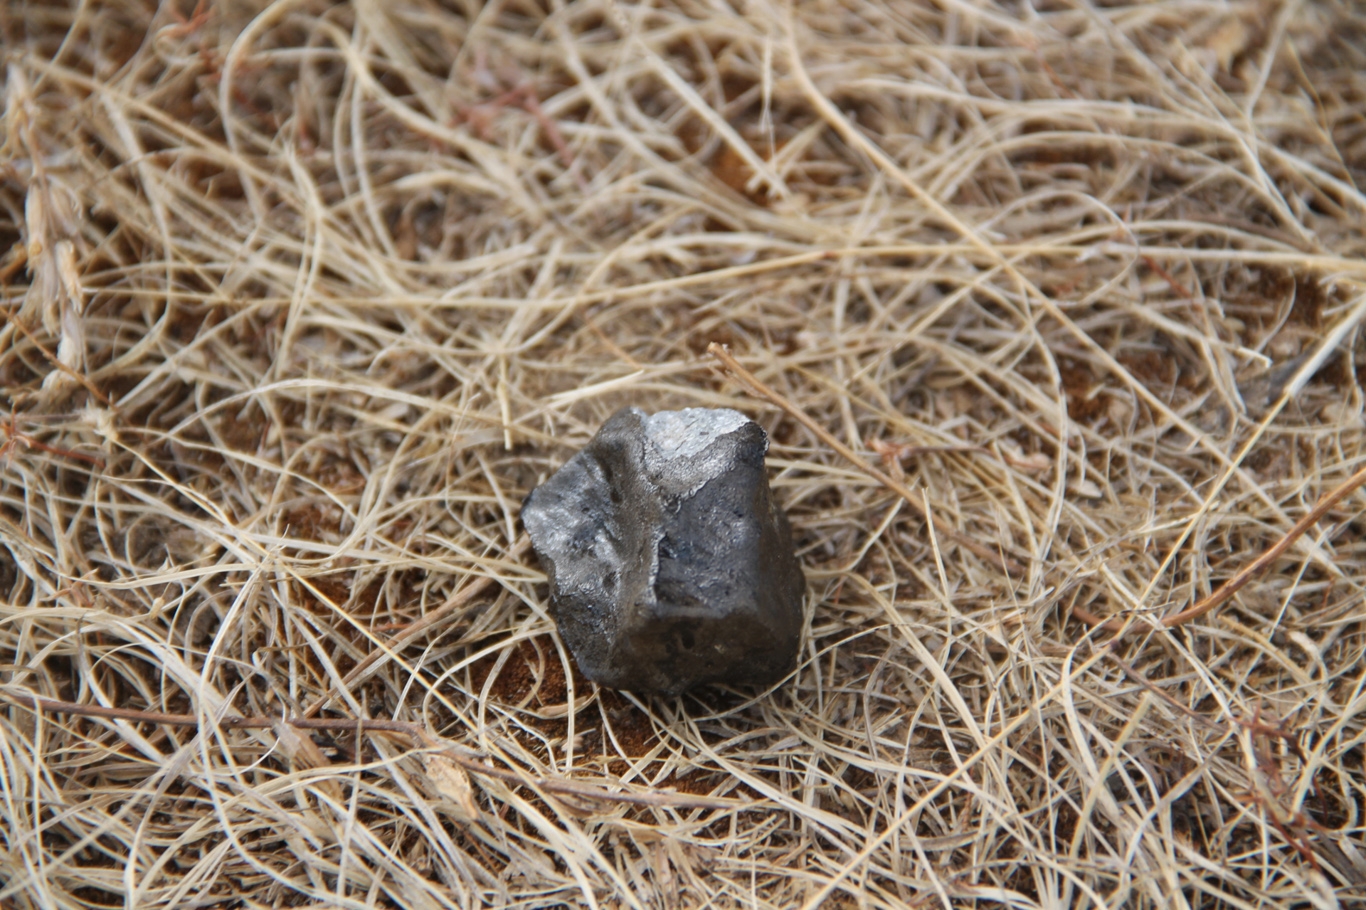 Bingöl meteorite / Image credit: dogruhaber.com.tr